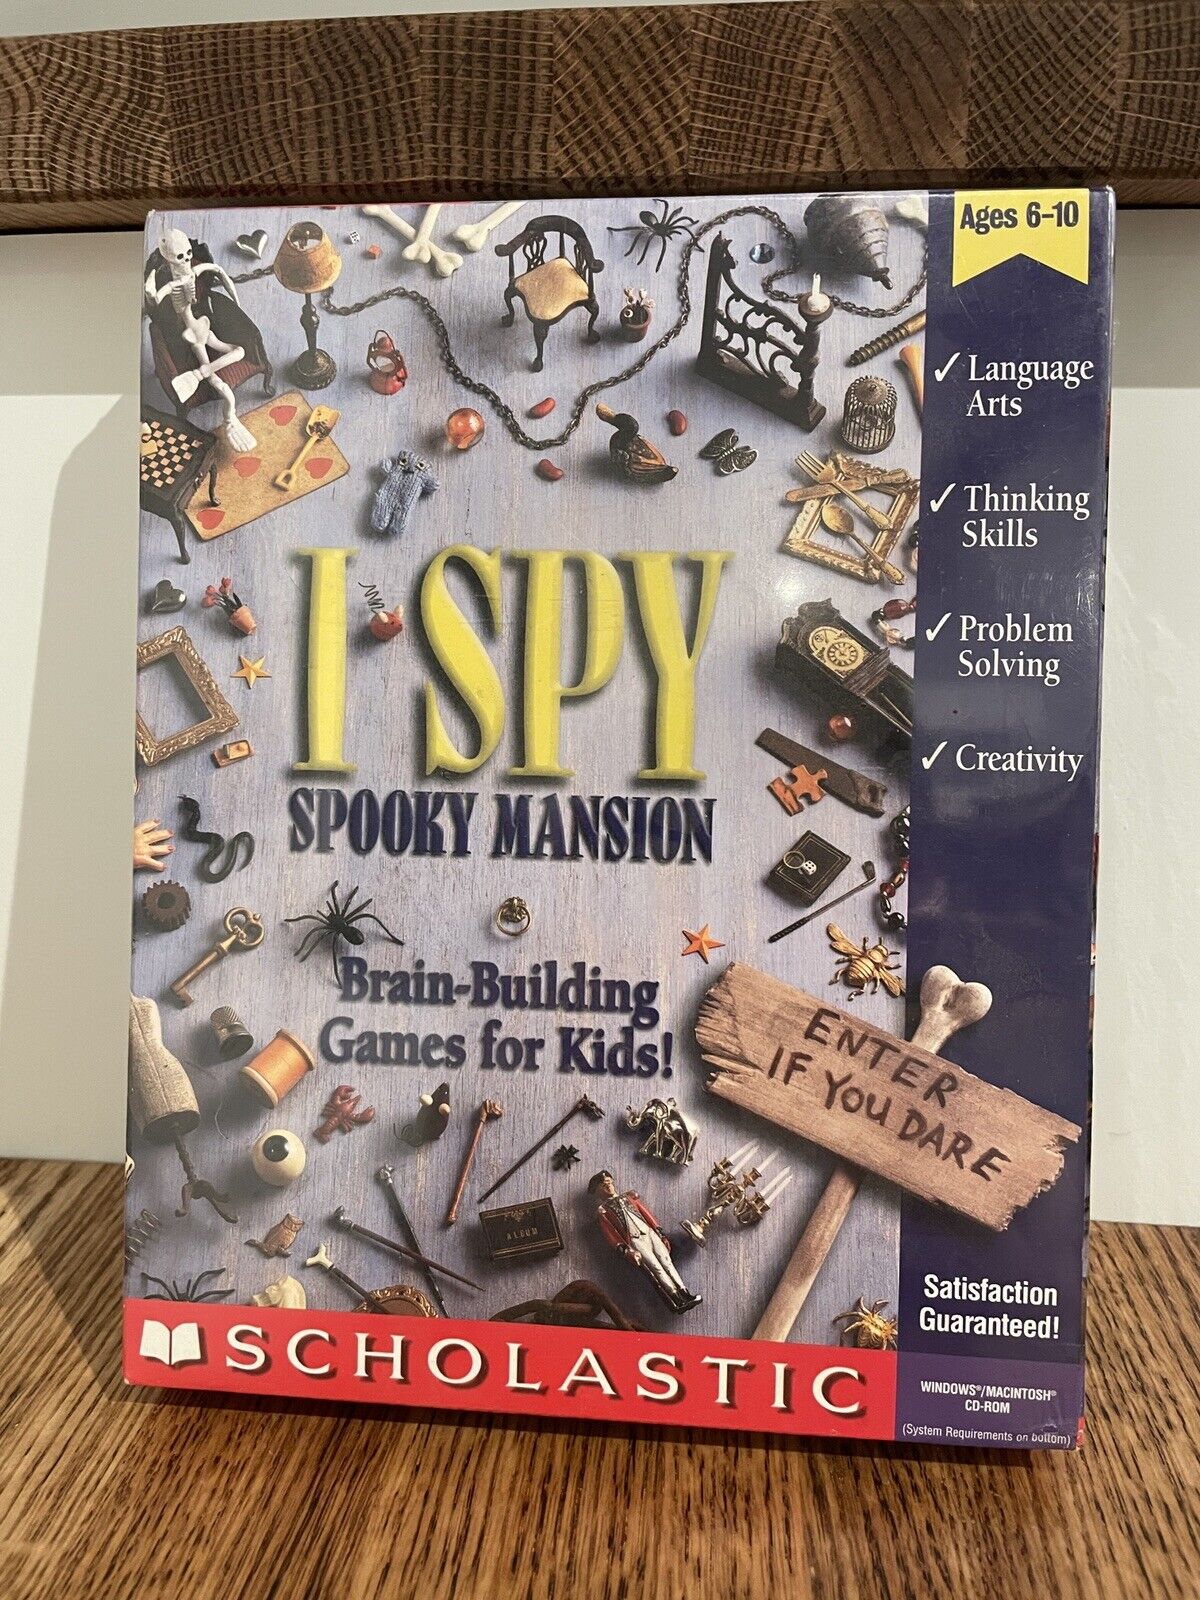 NEW I SPY SPOOKY MANSION SCHOLASTIC Vintage CD-ROM Windows / MacIntosh CD ROM